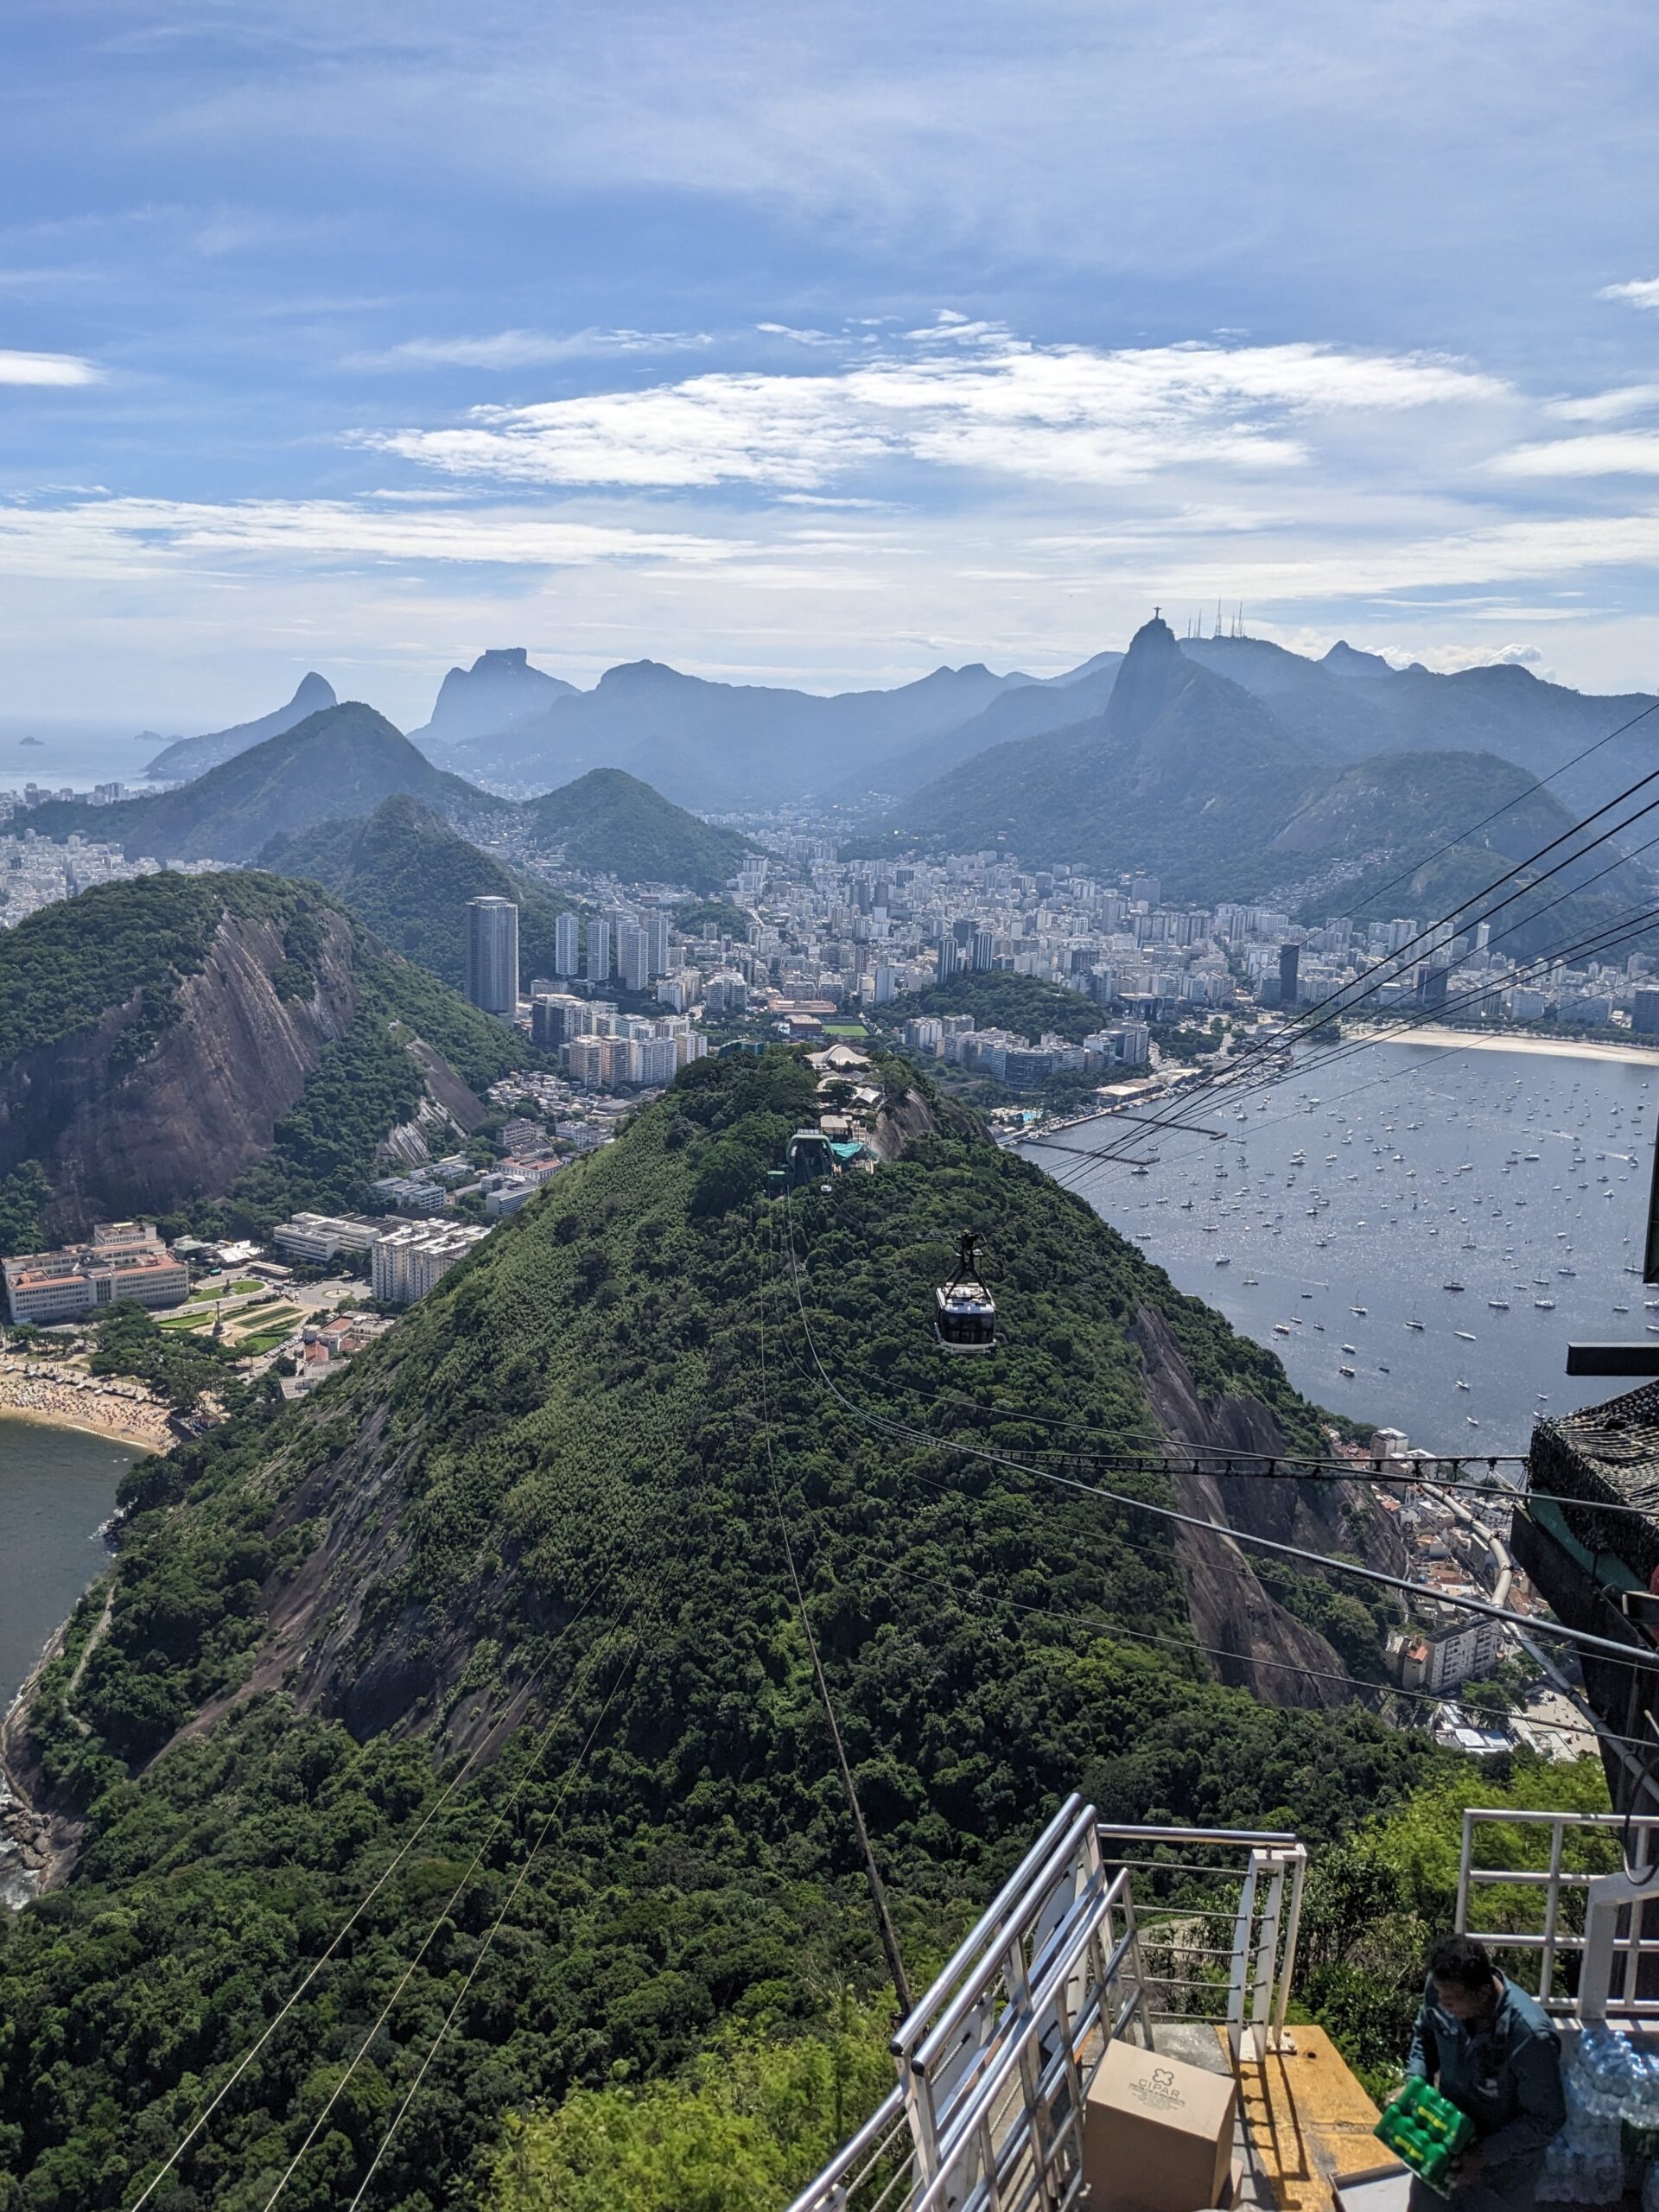 Rio de Janeiro- Get in Line to Sea the View